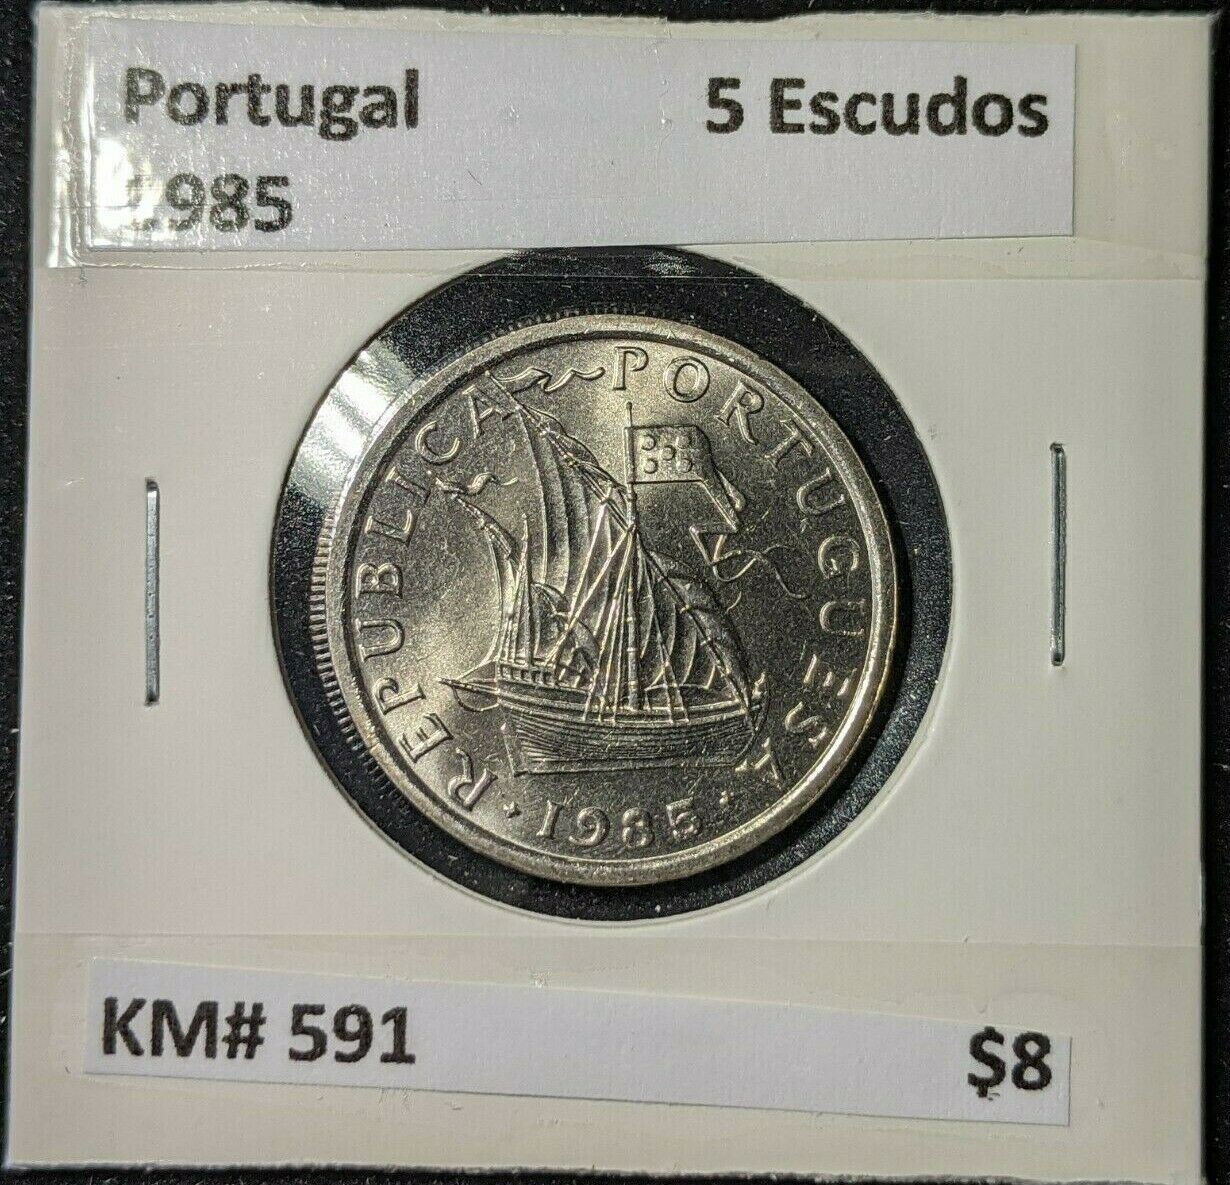 Portugal 1985 5 Escudos KM# 591 #955